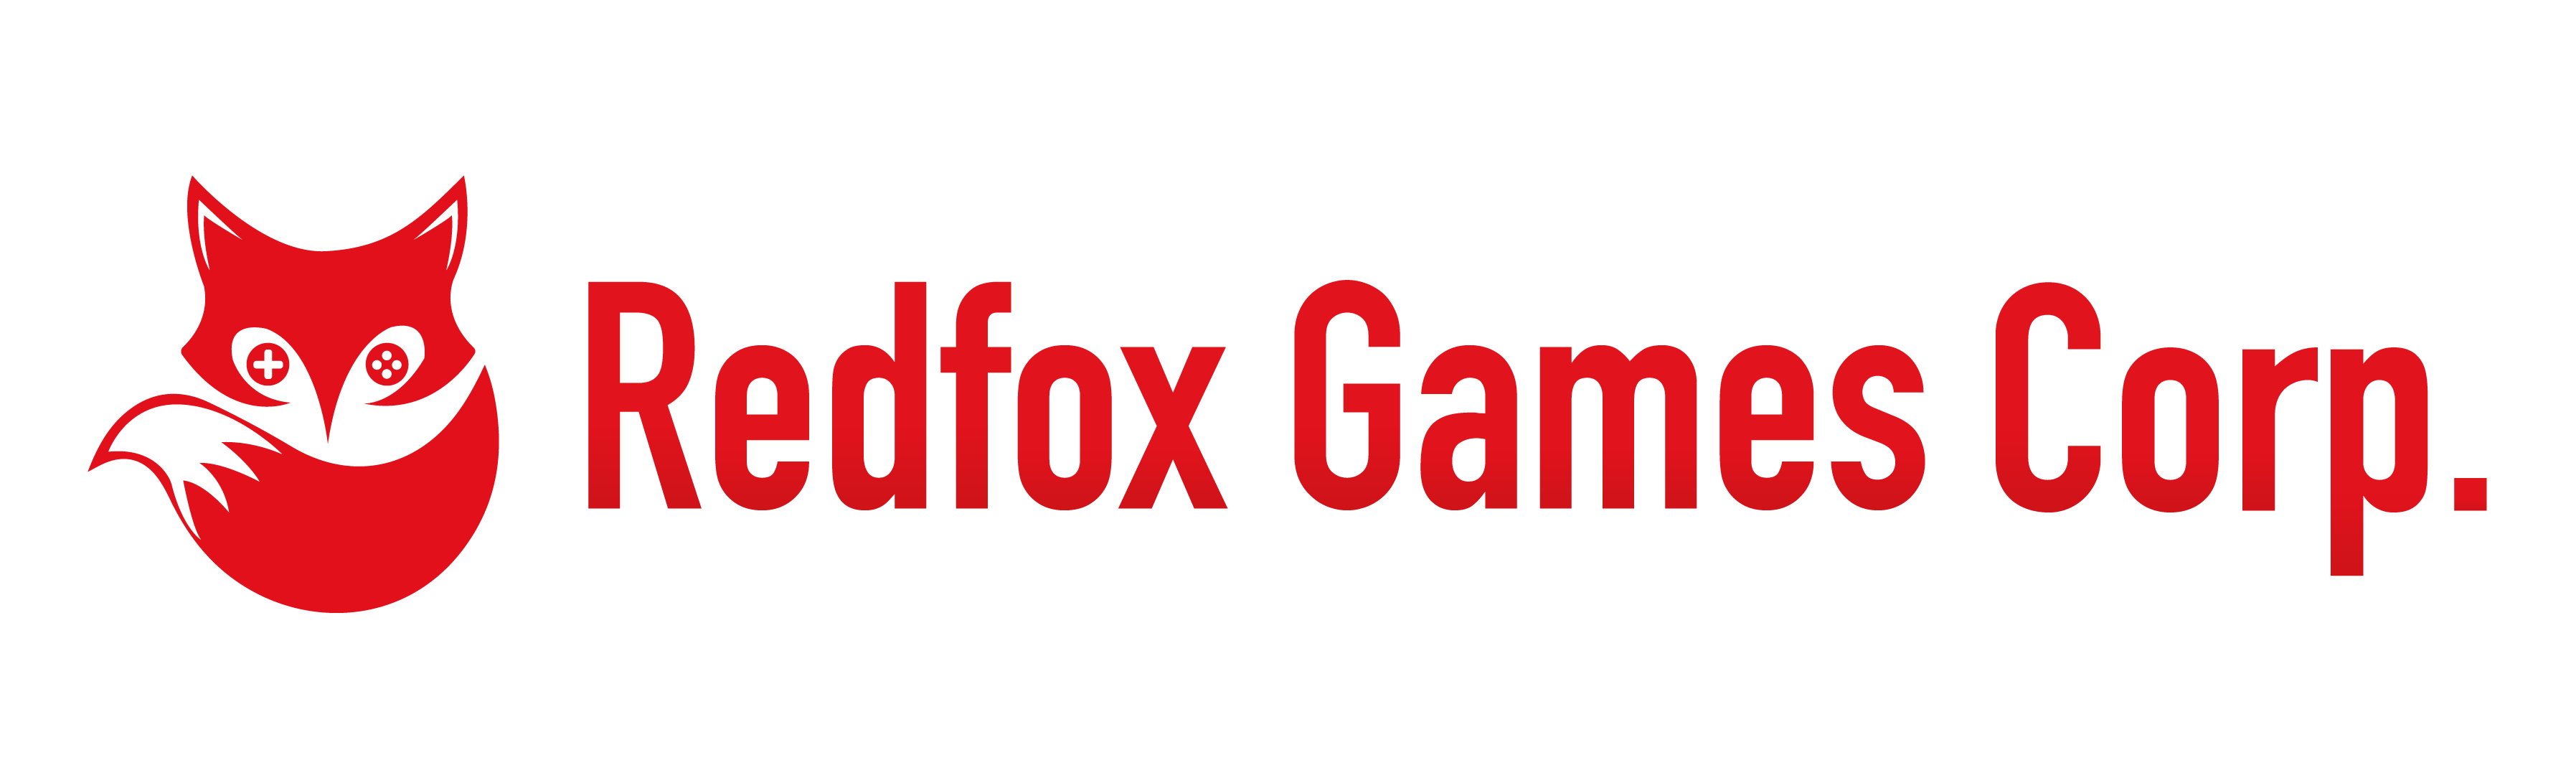 Redfox Games